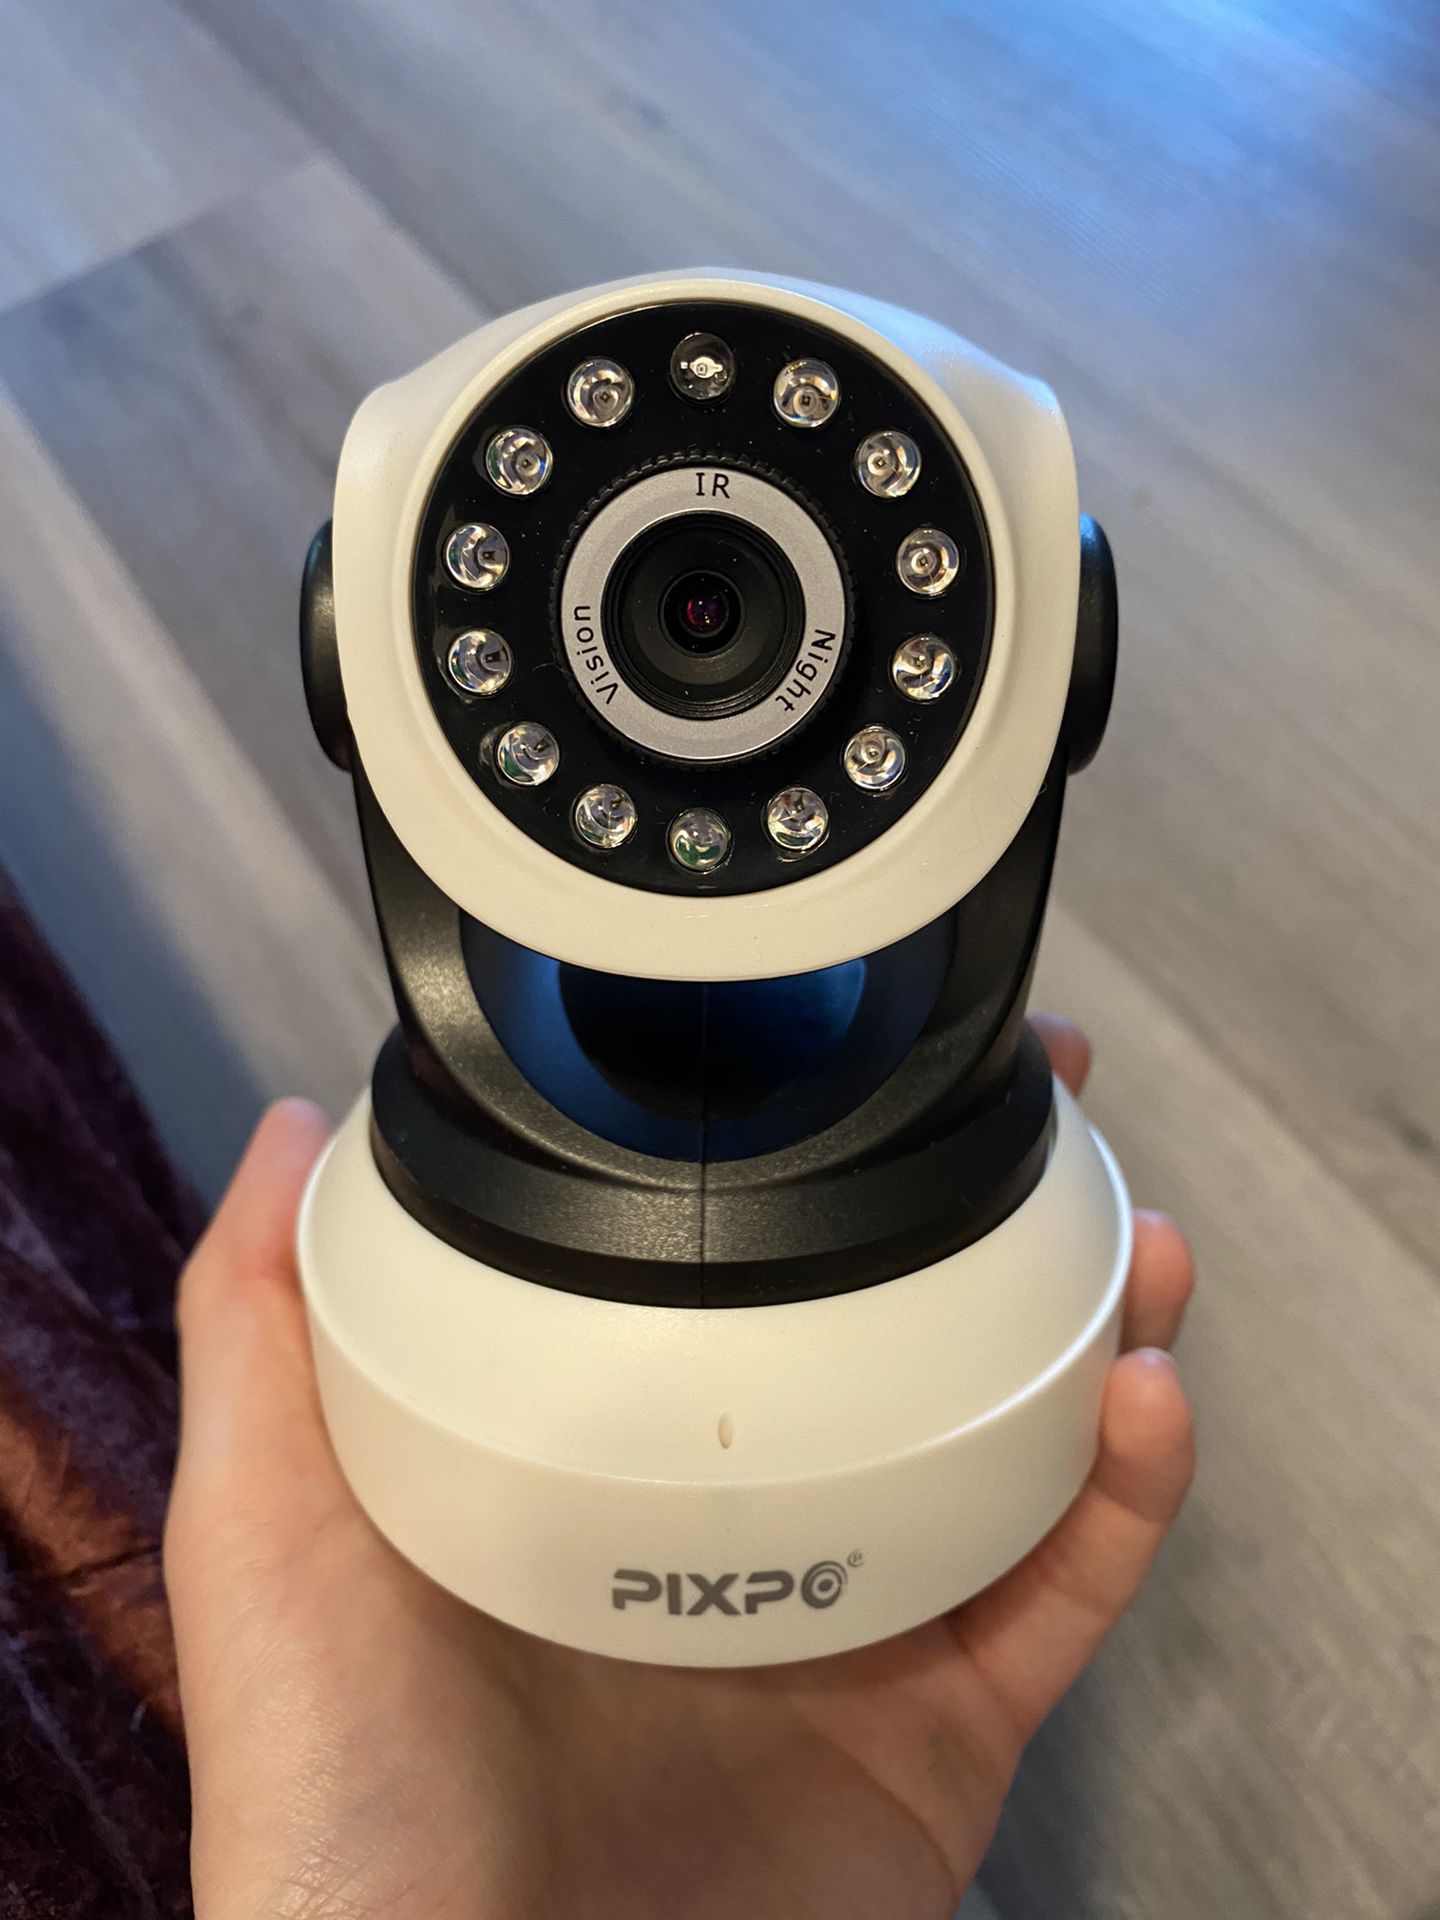 Pixpo security camera